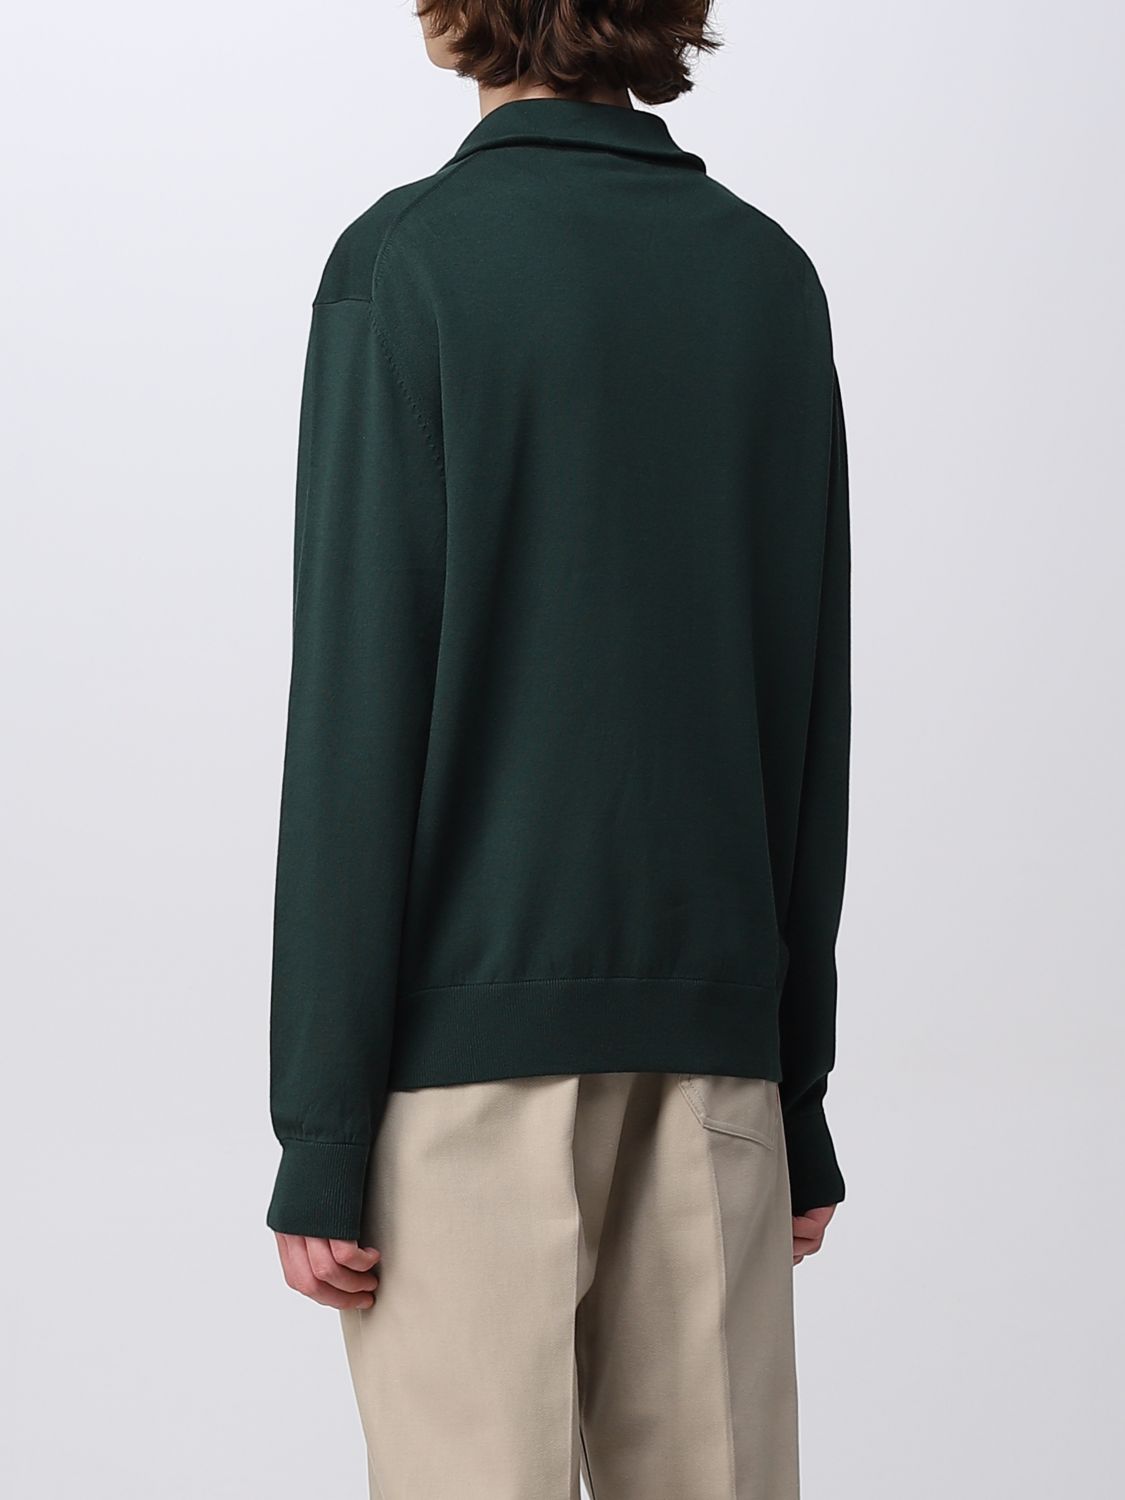 ACNE STUDIOS: sweater for man - Green | Acne Studios sweater B60268 ...